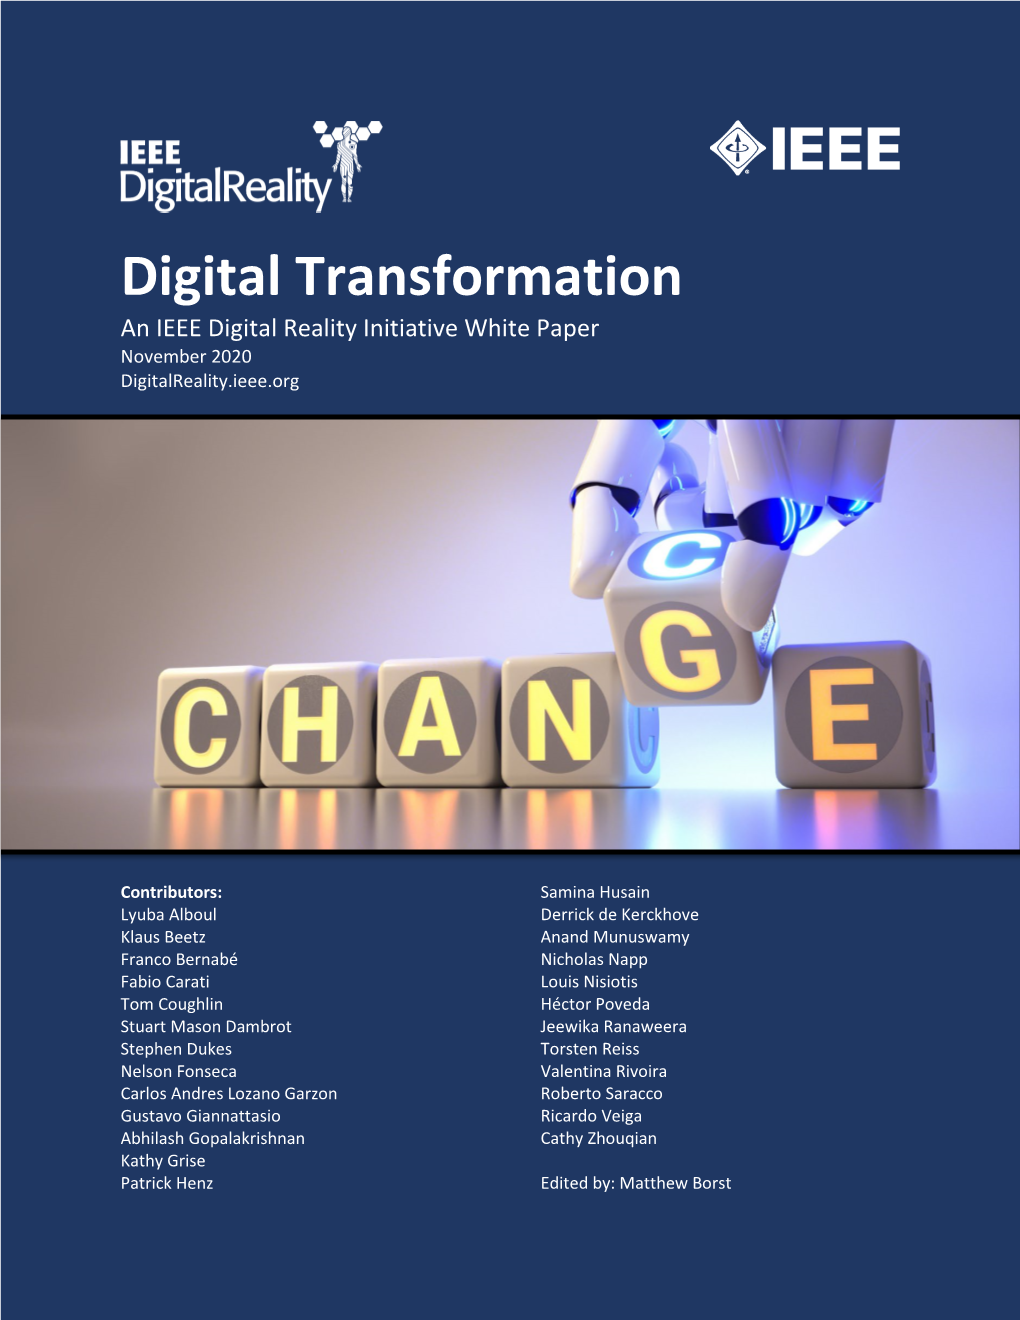 Digital Transformation White Paper